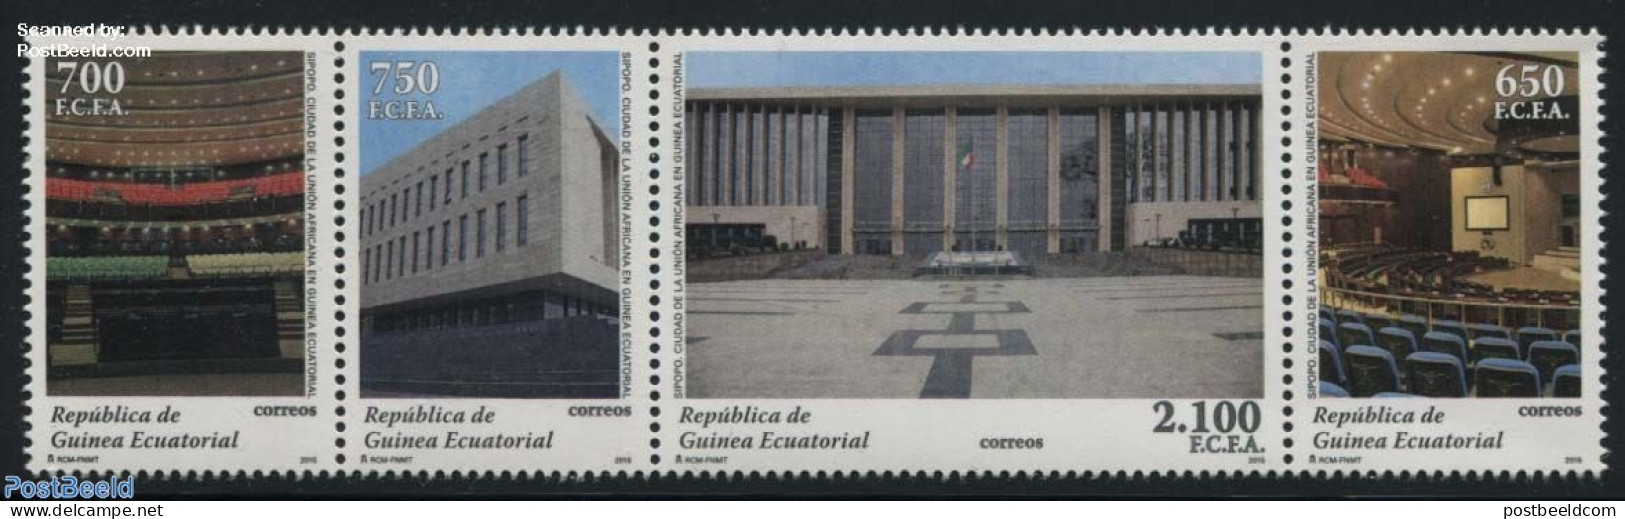 Equatorial Guinea 2015 Sipopo 4v [:::], Mint NH, Art - Modern Architecture - Guinée Equatoriale